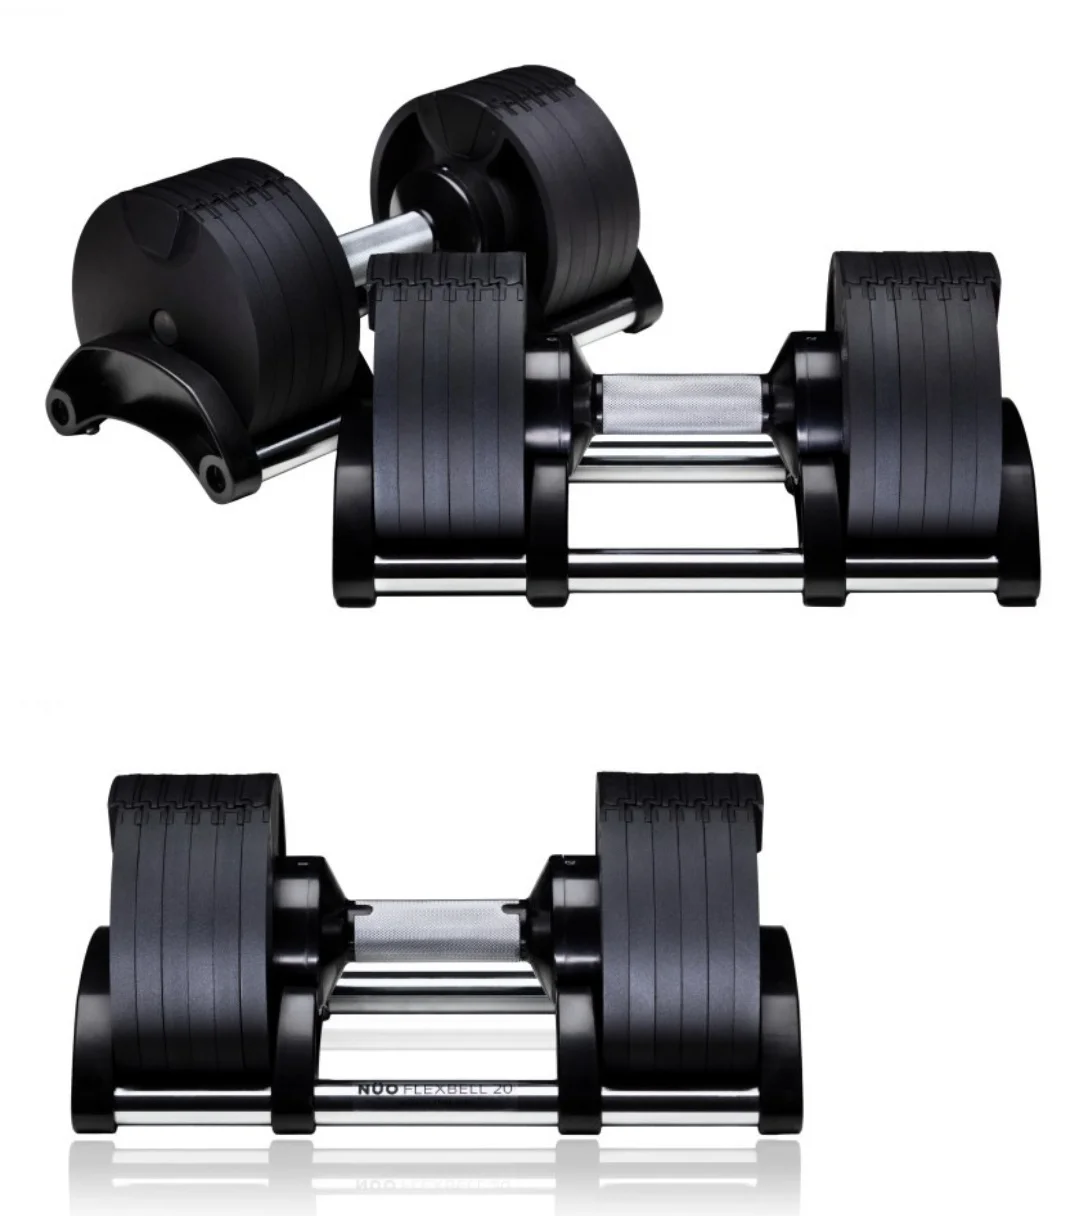 

Workout Gym Equipment Dumbbell Set Weight Lifting Training Adjustable Dumbbells Buy Online, Black